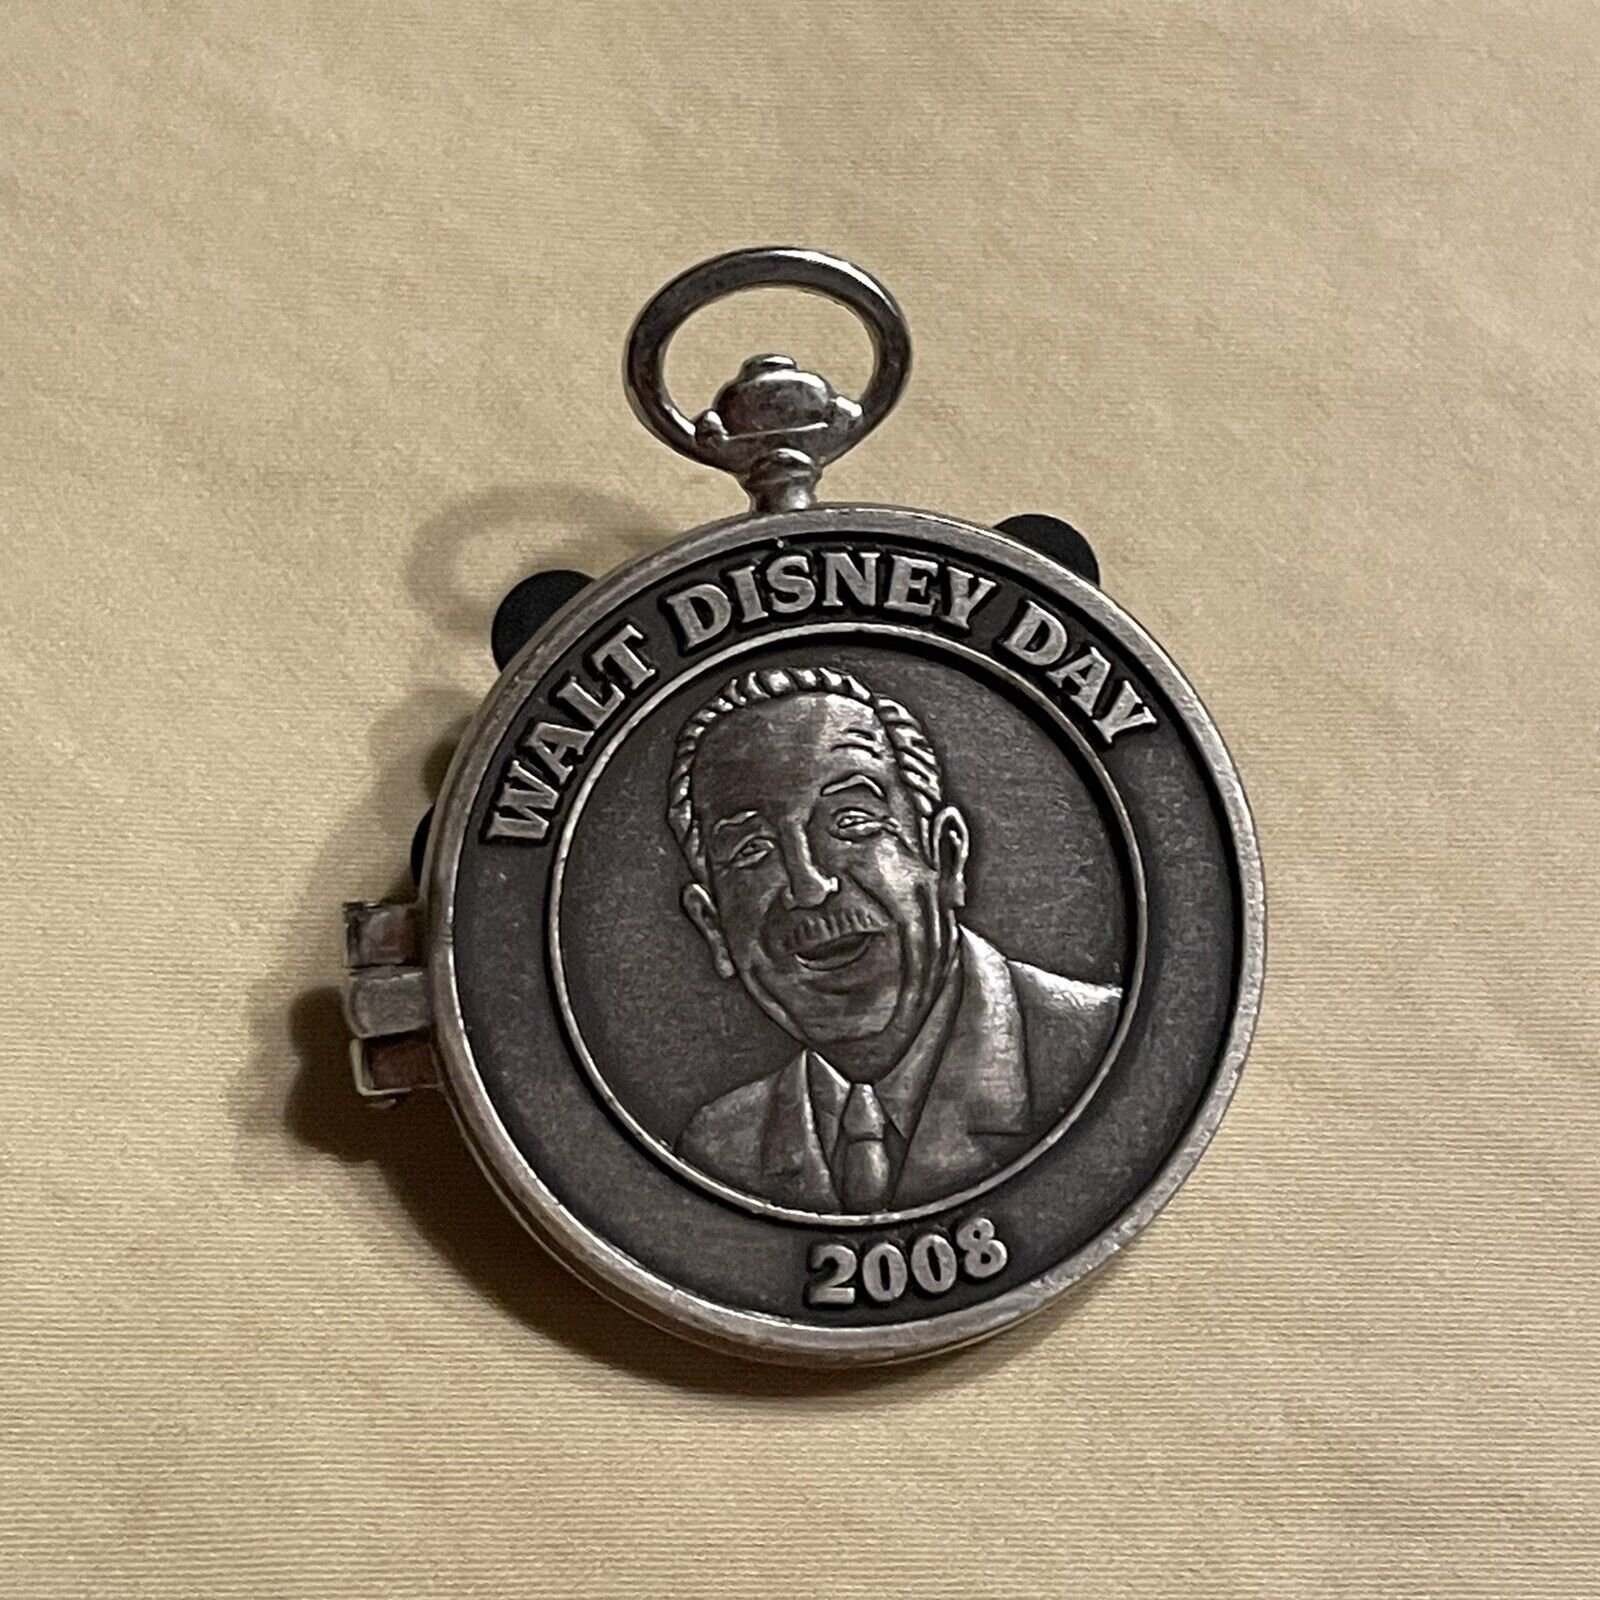 2008 Walt Disney World Day 2008 Pocket Watch Pin Limited Edition Hinged